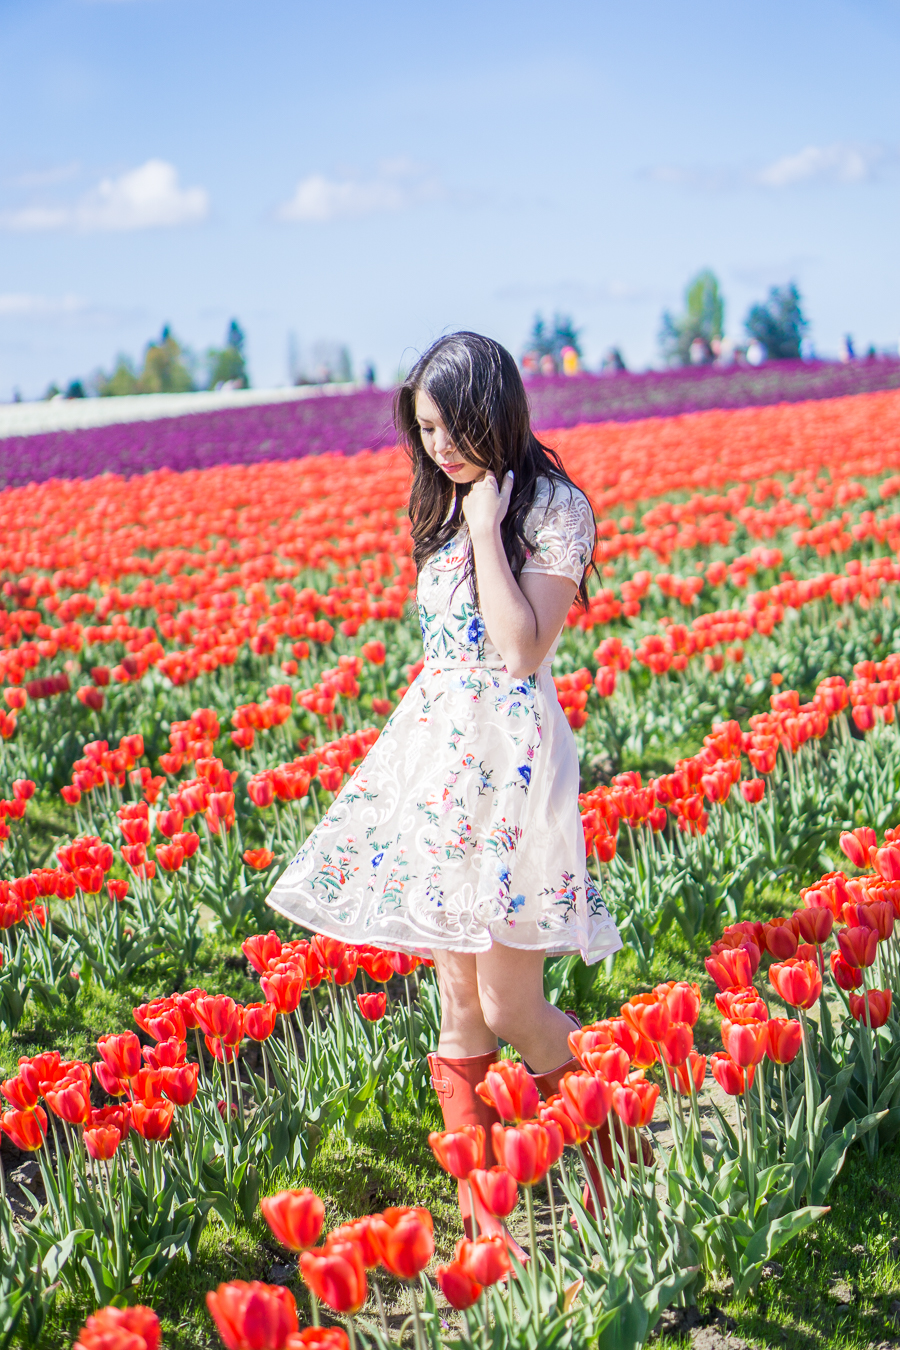 skagit tulip fields washington, floral dress chicwish garden embroidered beige organza dress, red rain boots outfit